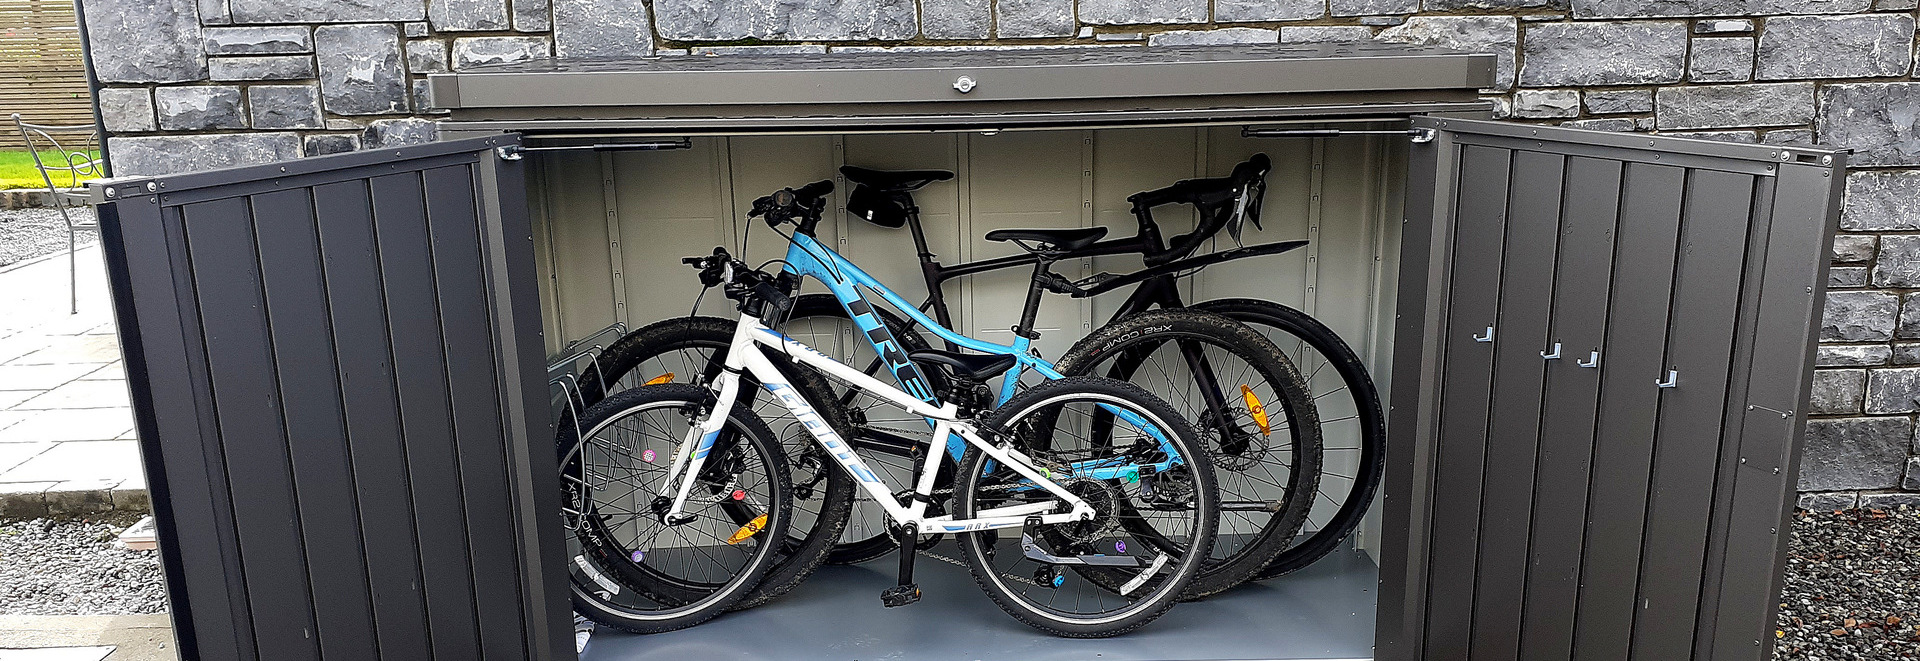 Premium quality Bike Storage - Biohort HighBoard 200  | supplied + fitted in Skerries, Co Dublin.